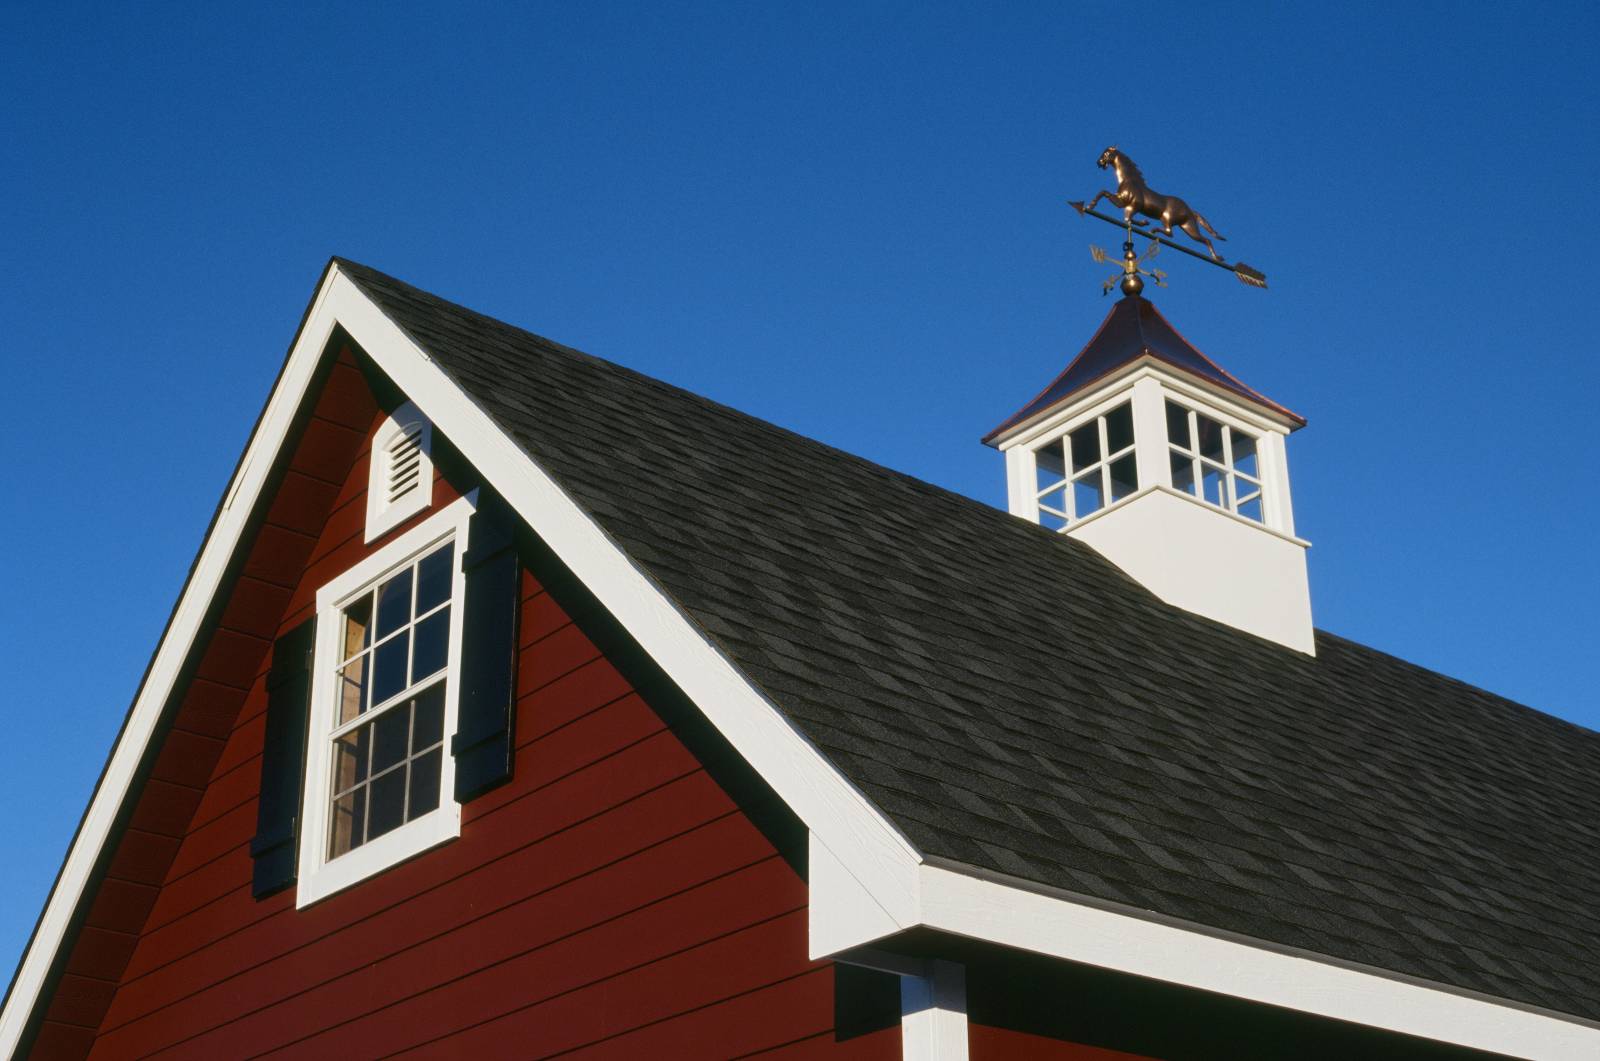 Bold inspiring colors: barn red siding • black shutters • white trim • blue sky • copper top cupola & weathervane